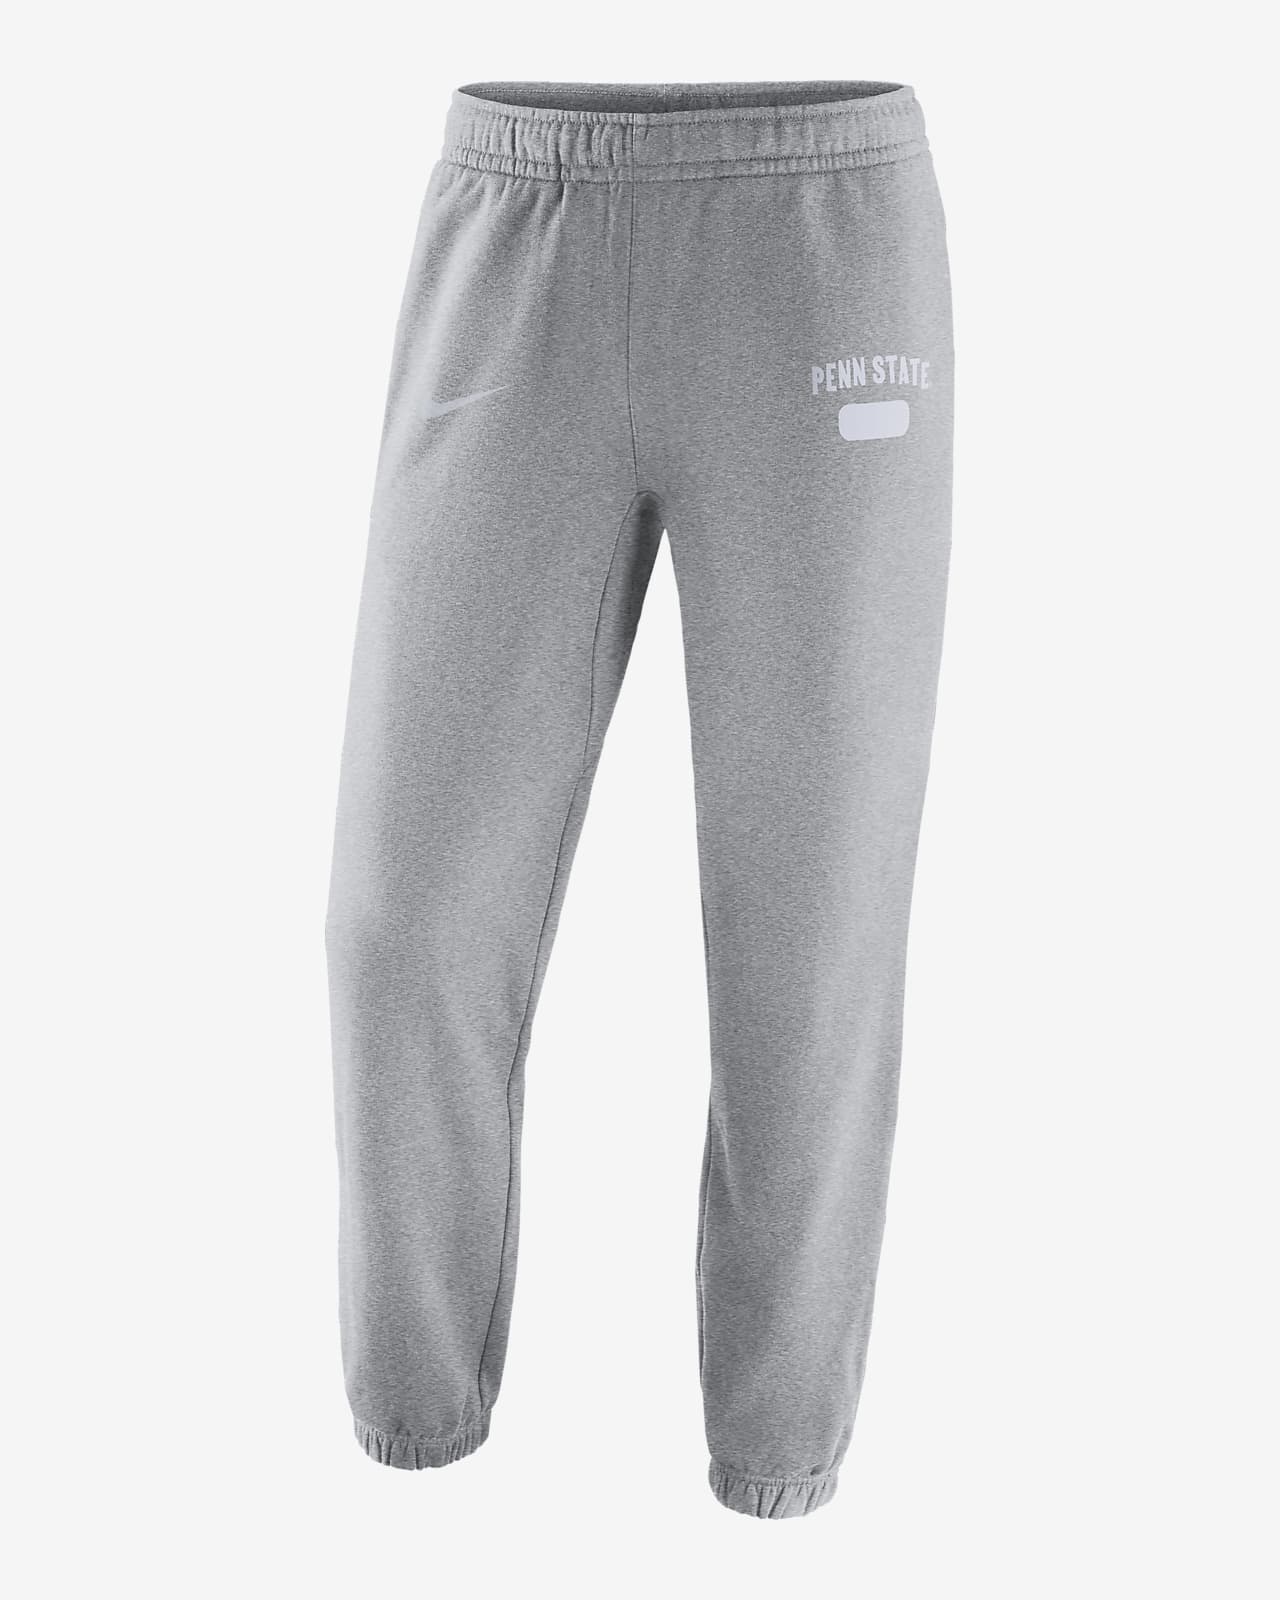 Nike College (Penn State) Fleece Pants 